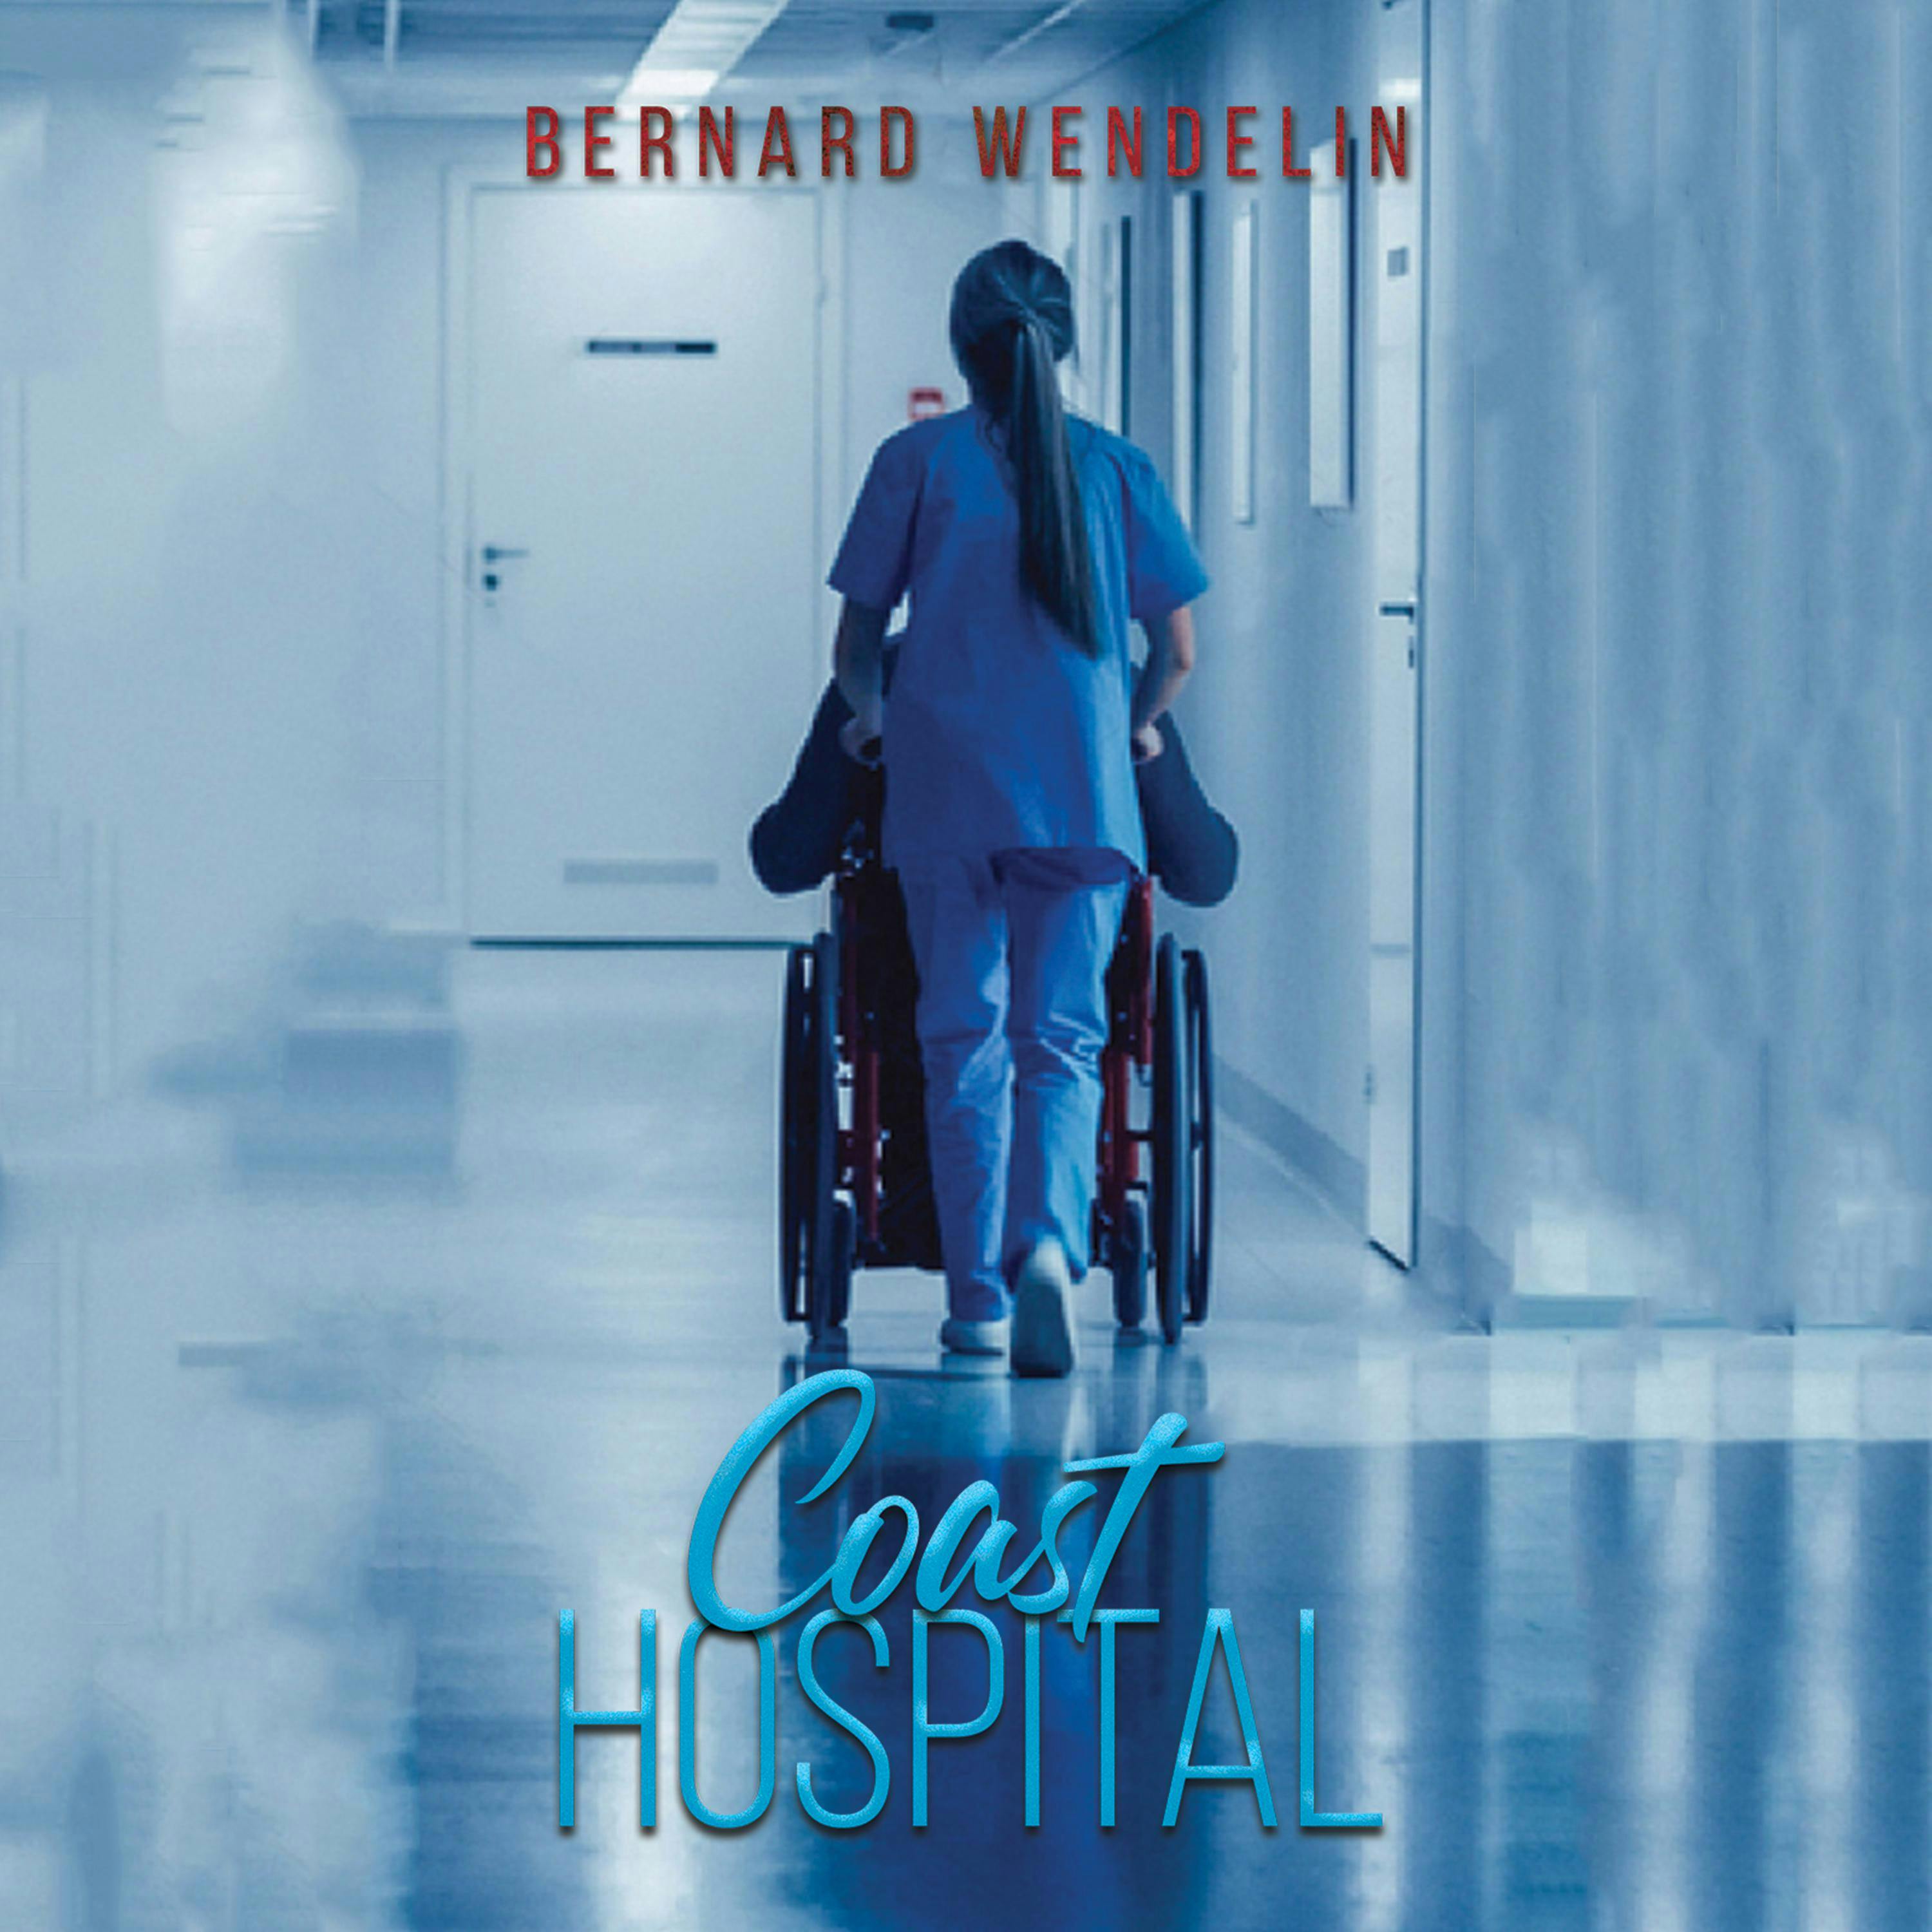 Coast Hospital - Bernard Wendelin